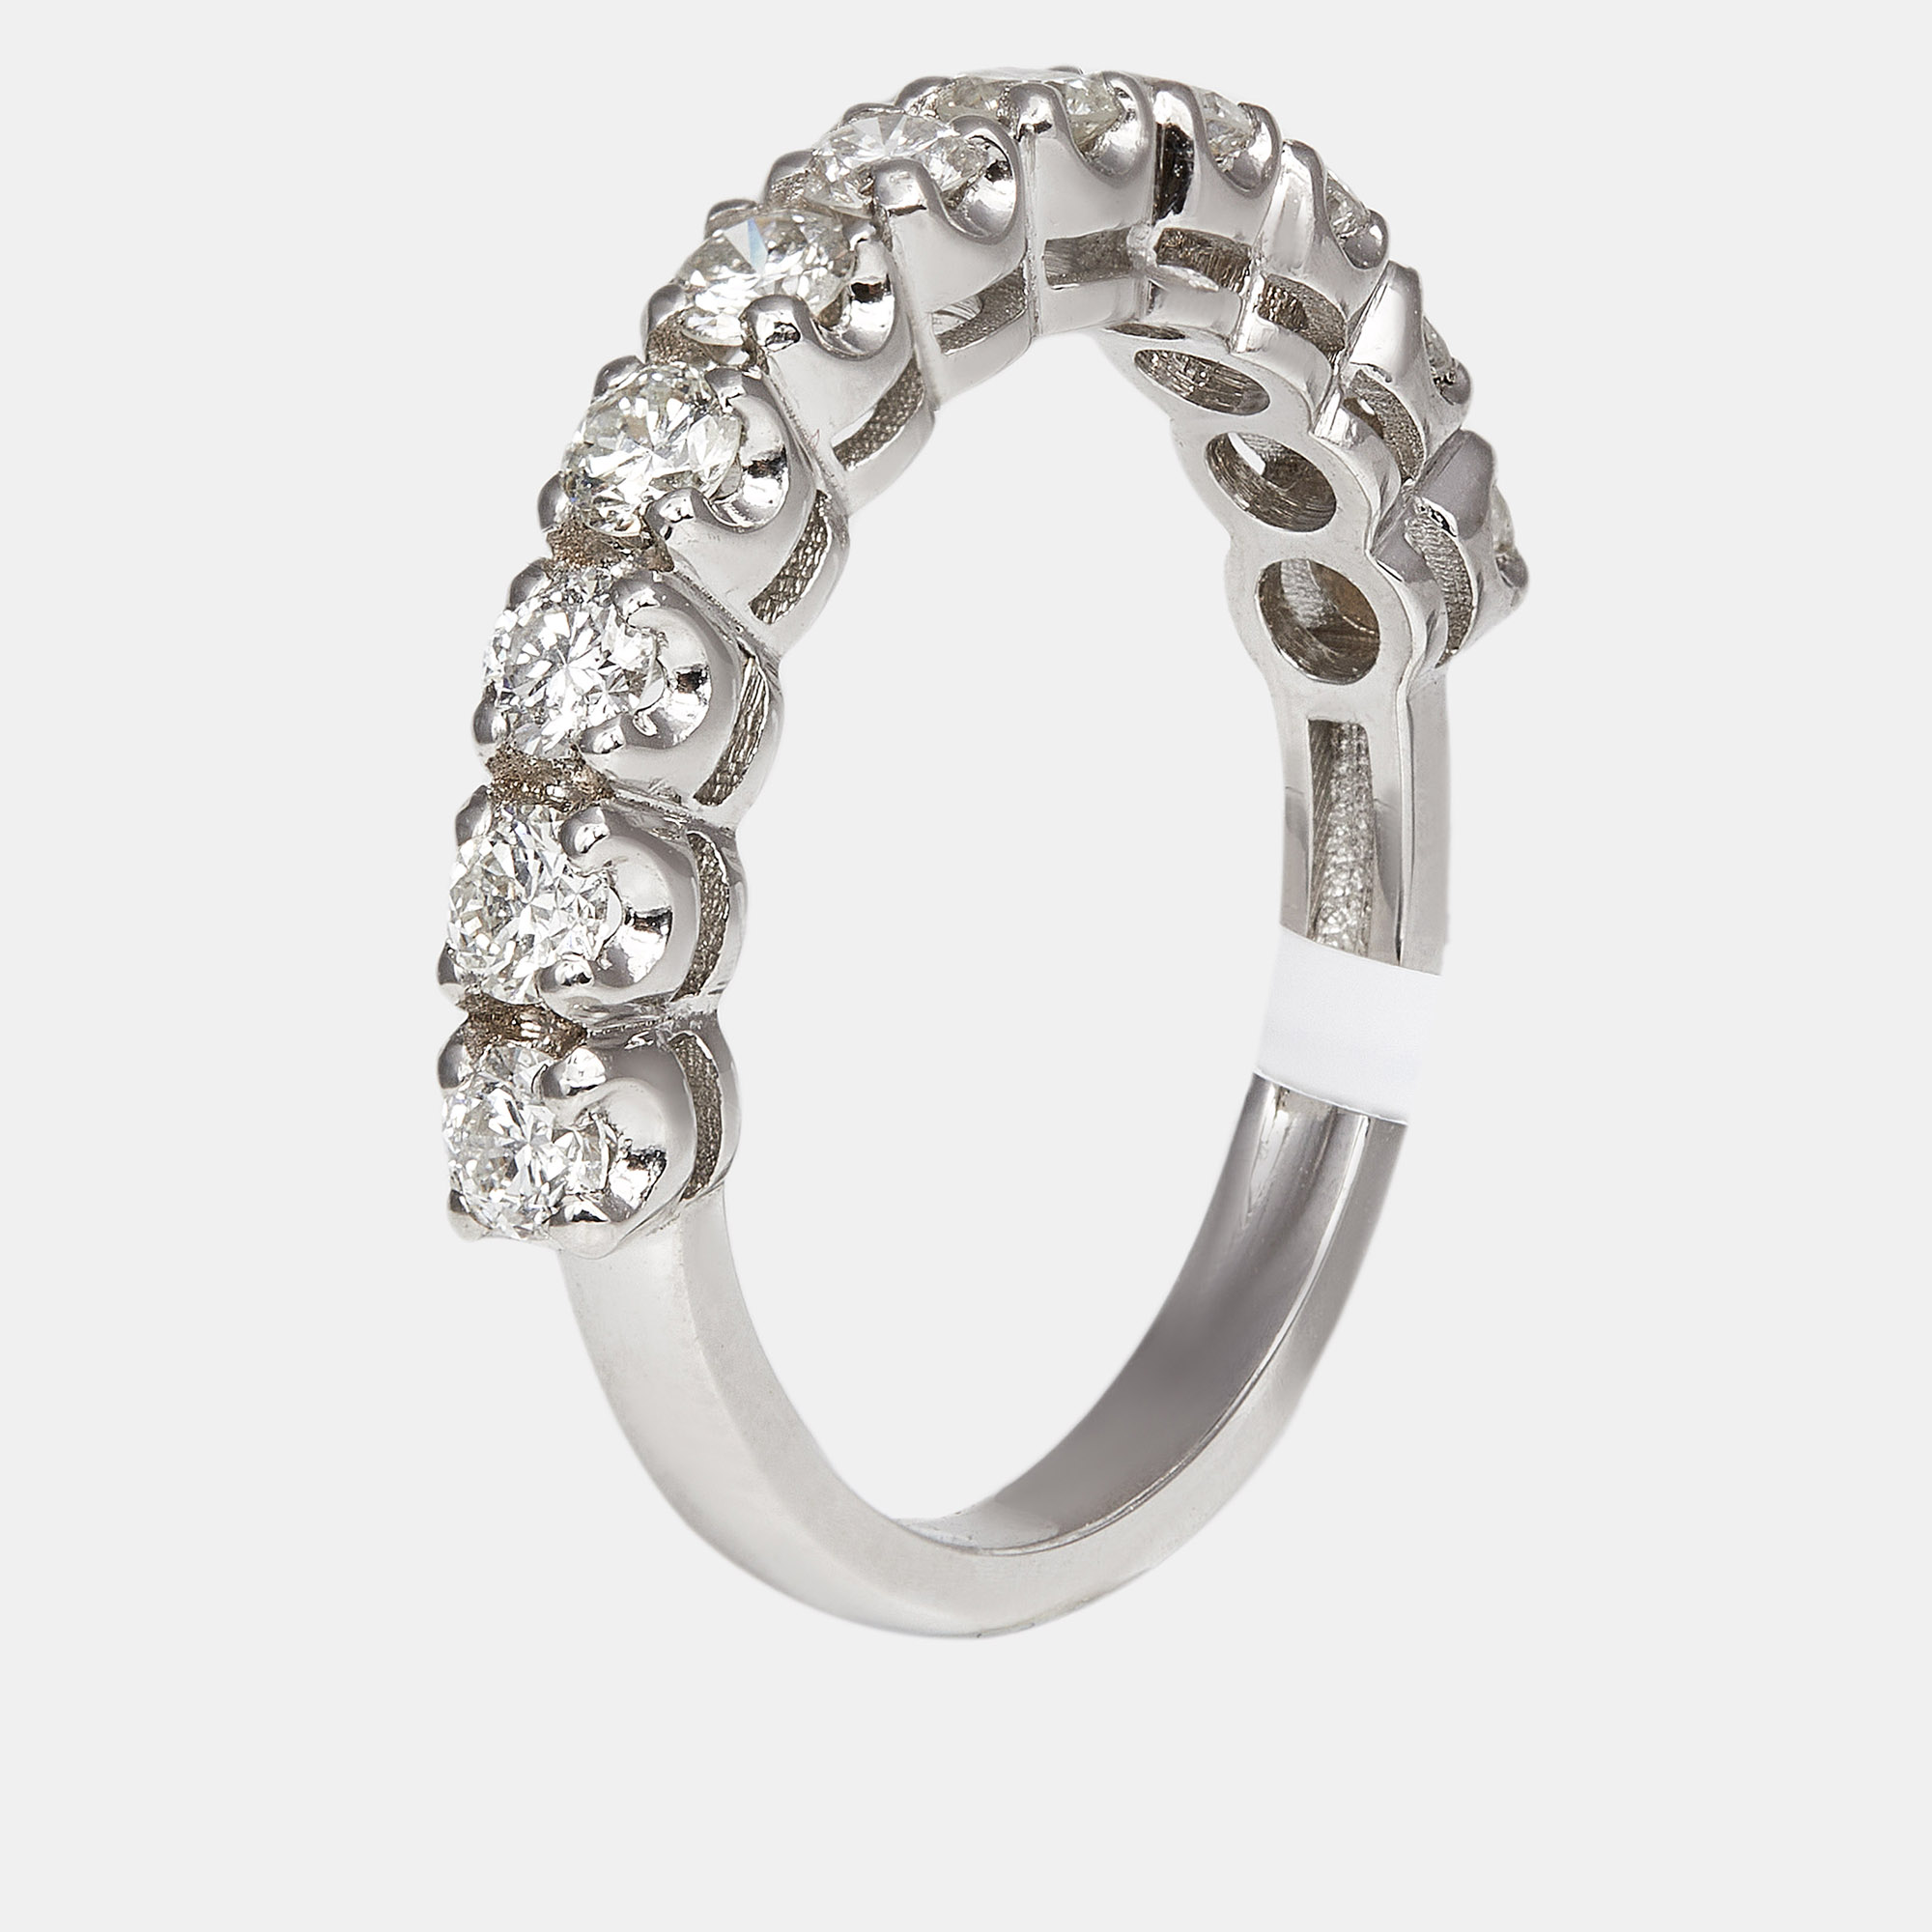 The diamond edit classic round diamond 0.87 ct 18k white gold half eternity wedding ring size 54